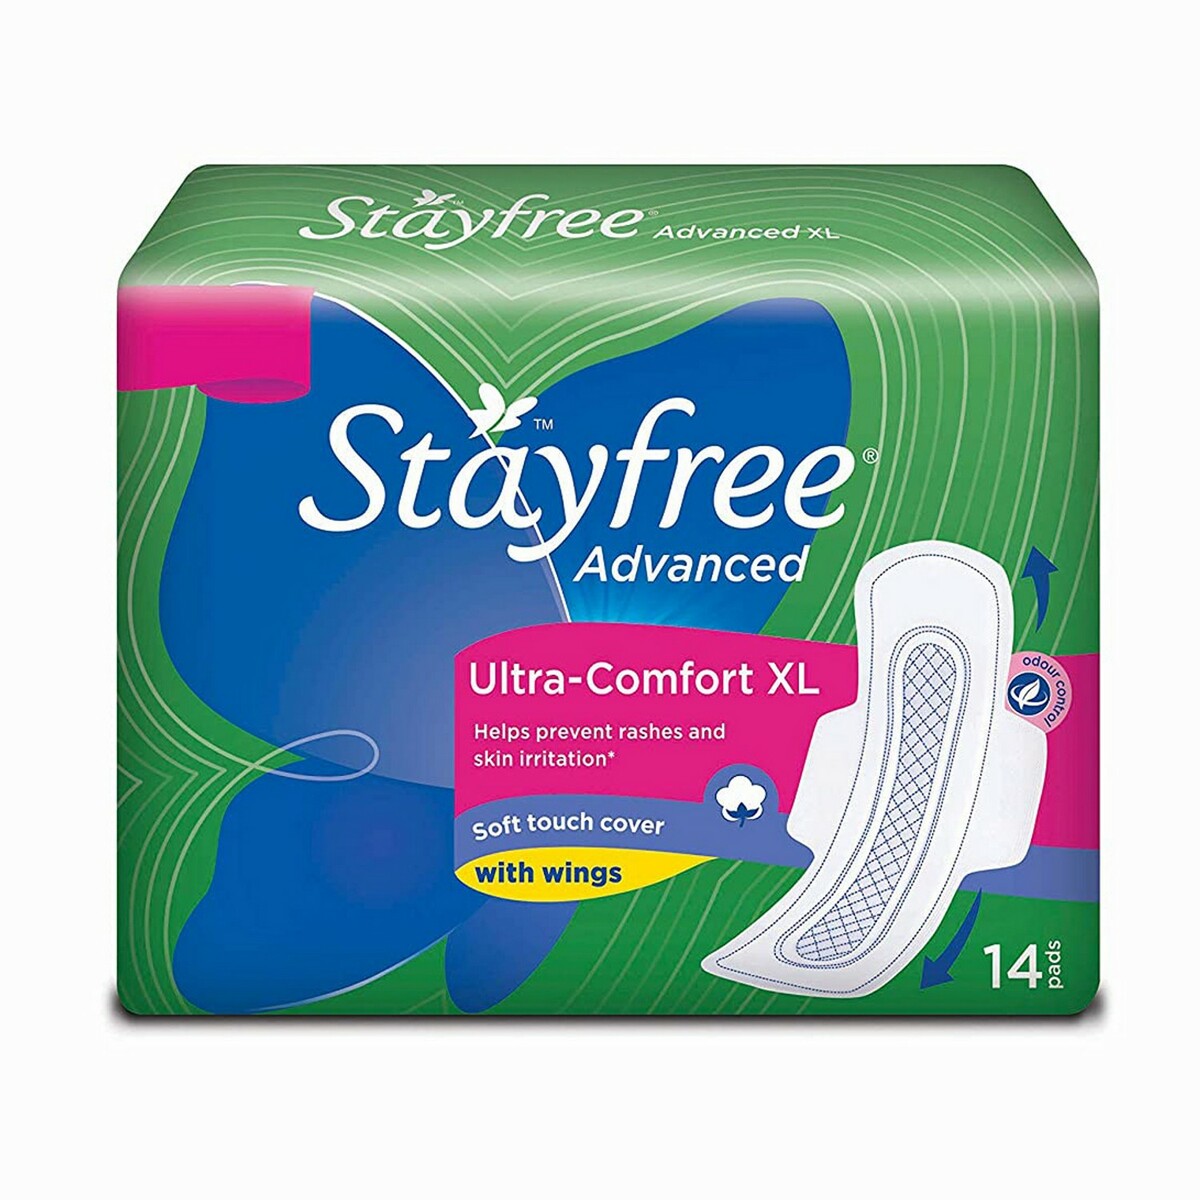 Stayfree Advanced XL 14's